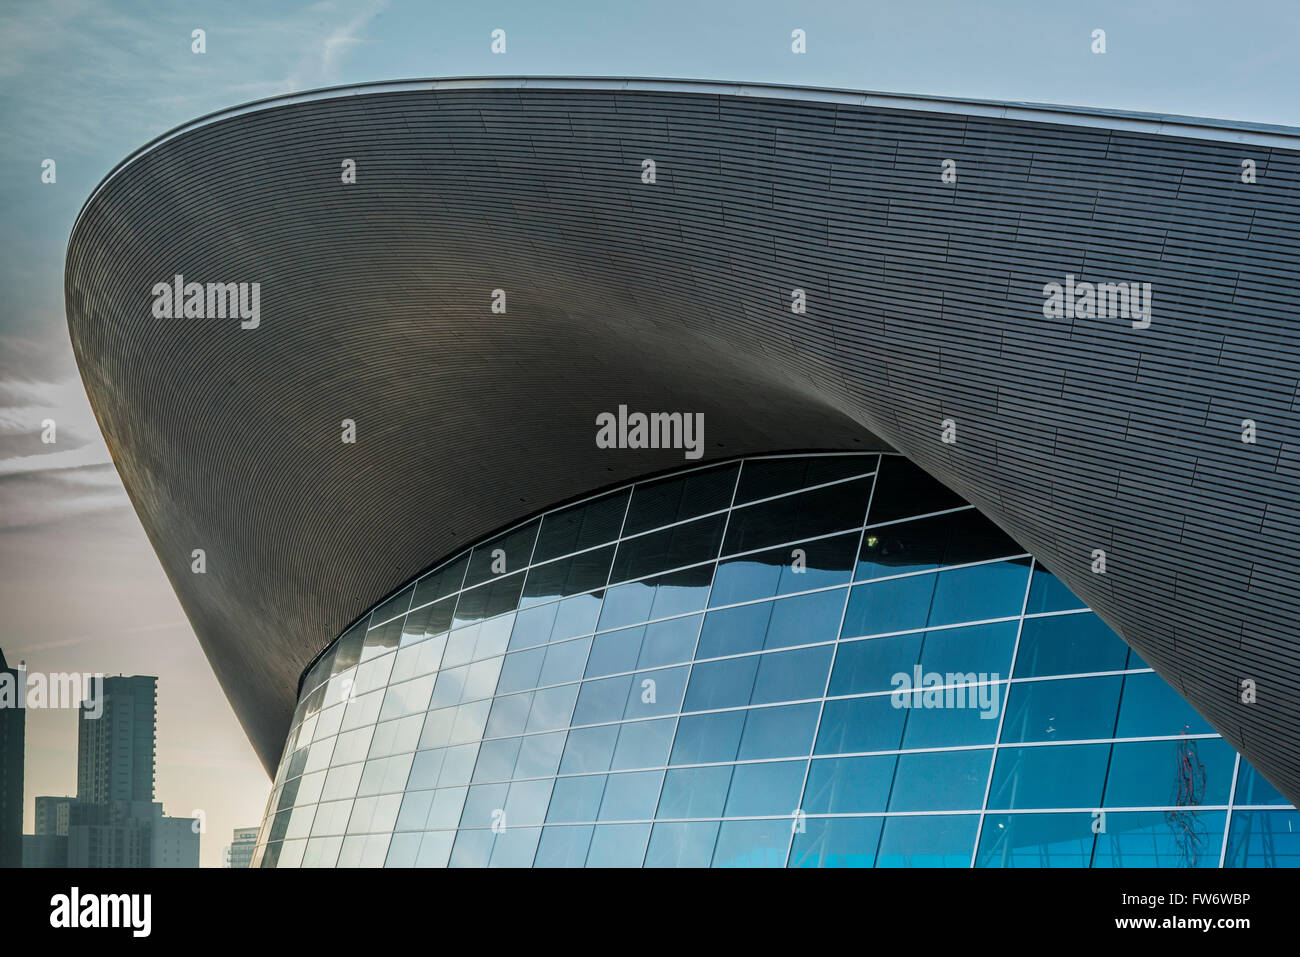 The London Aquatics Centre It was designed by Pritzker Prize-winning architect Zaha Hadid in 2004. Stock Photo